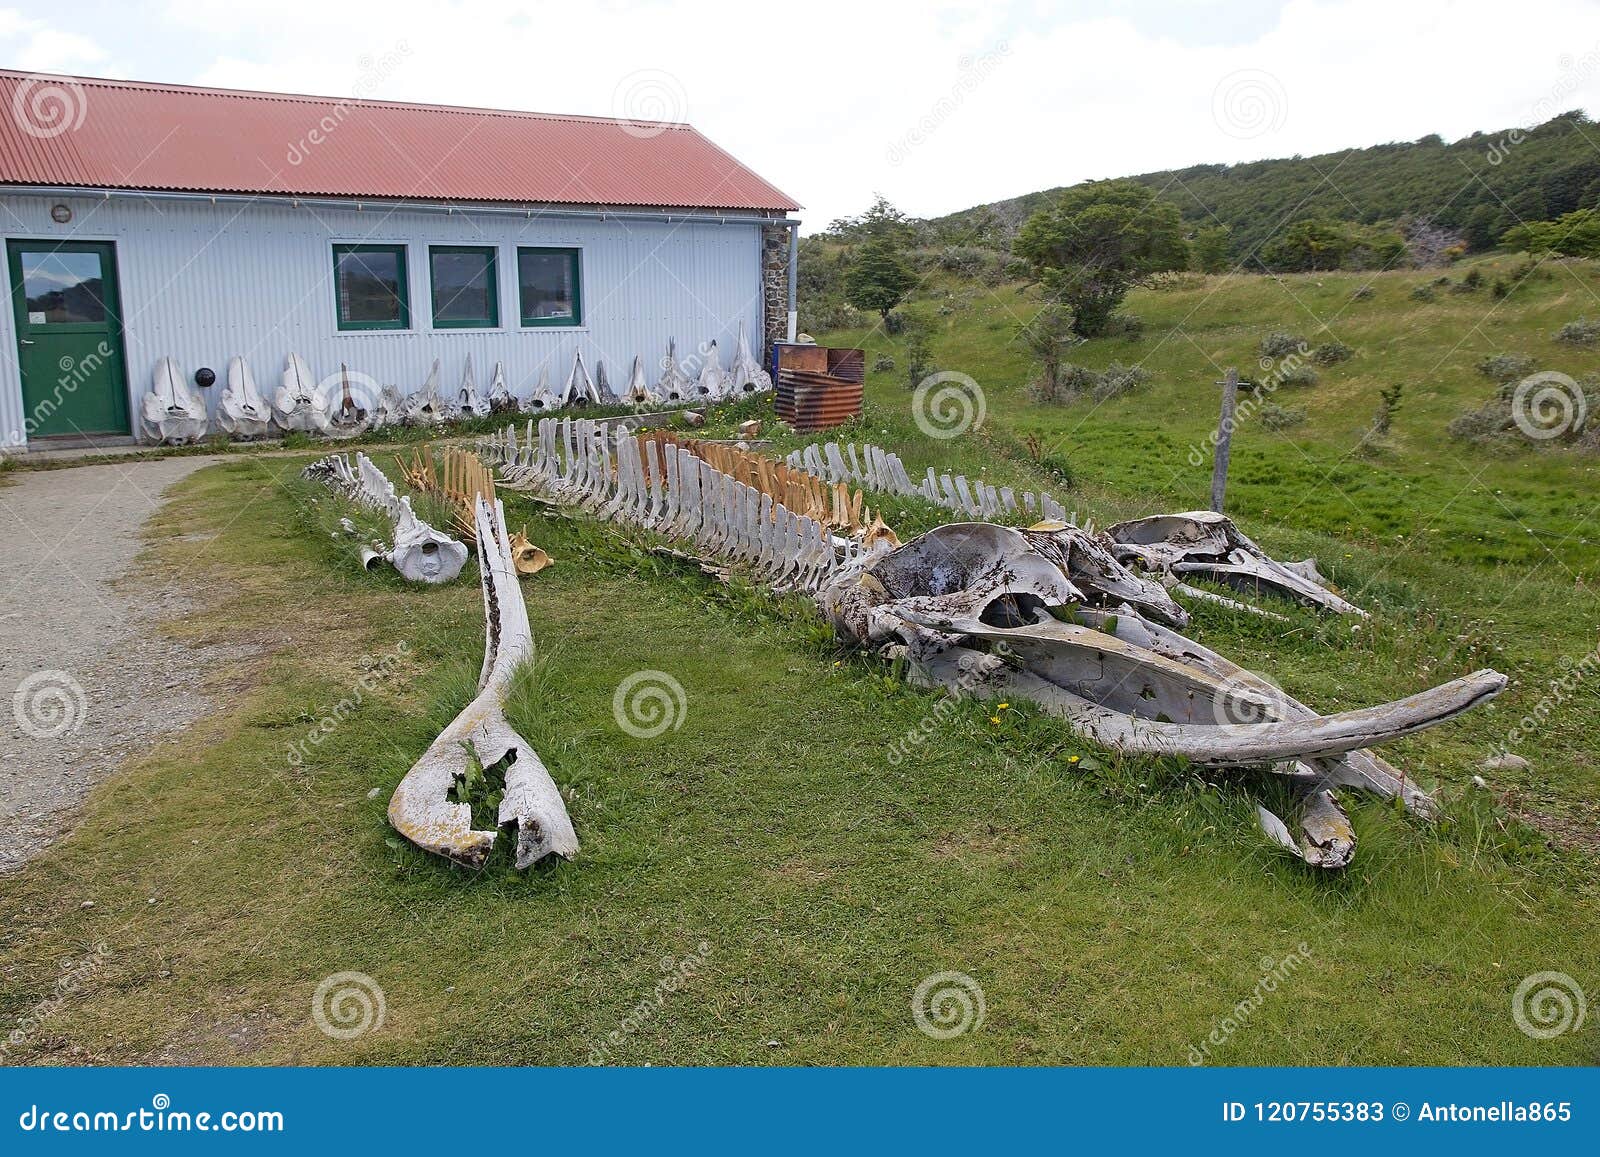 whale skeleton at museum at estancia harberton in tierra del fuego, patagonia, argentina